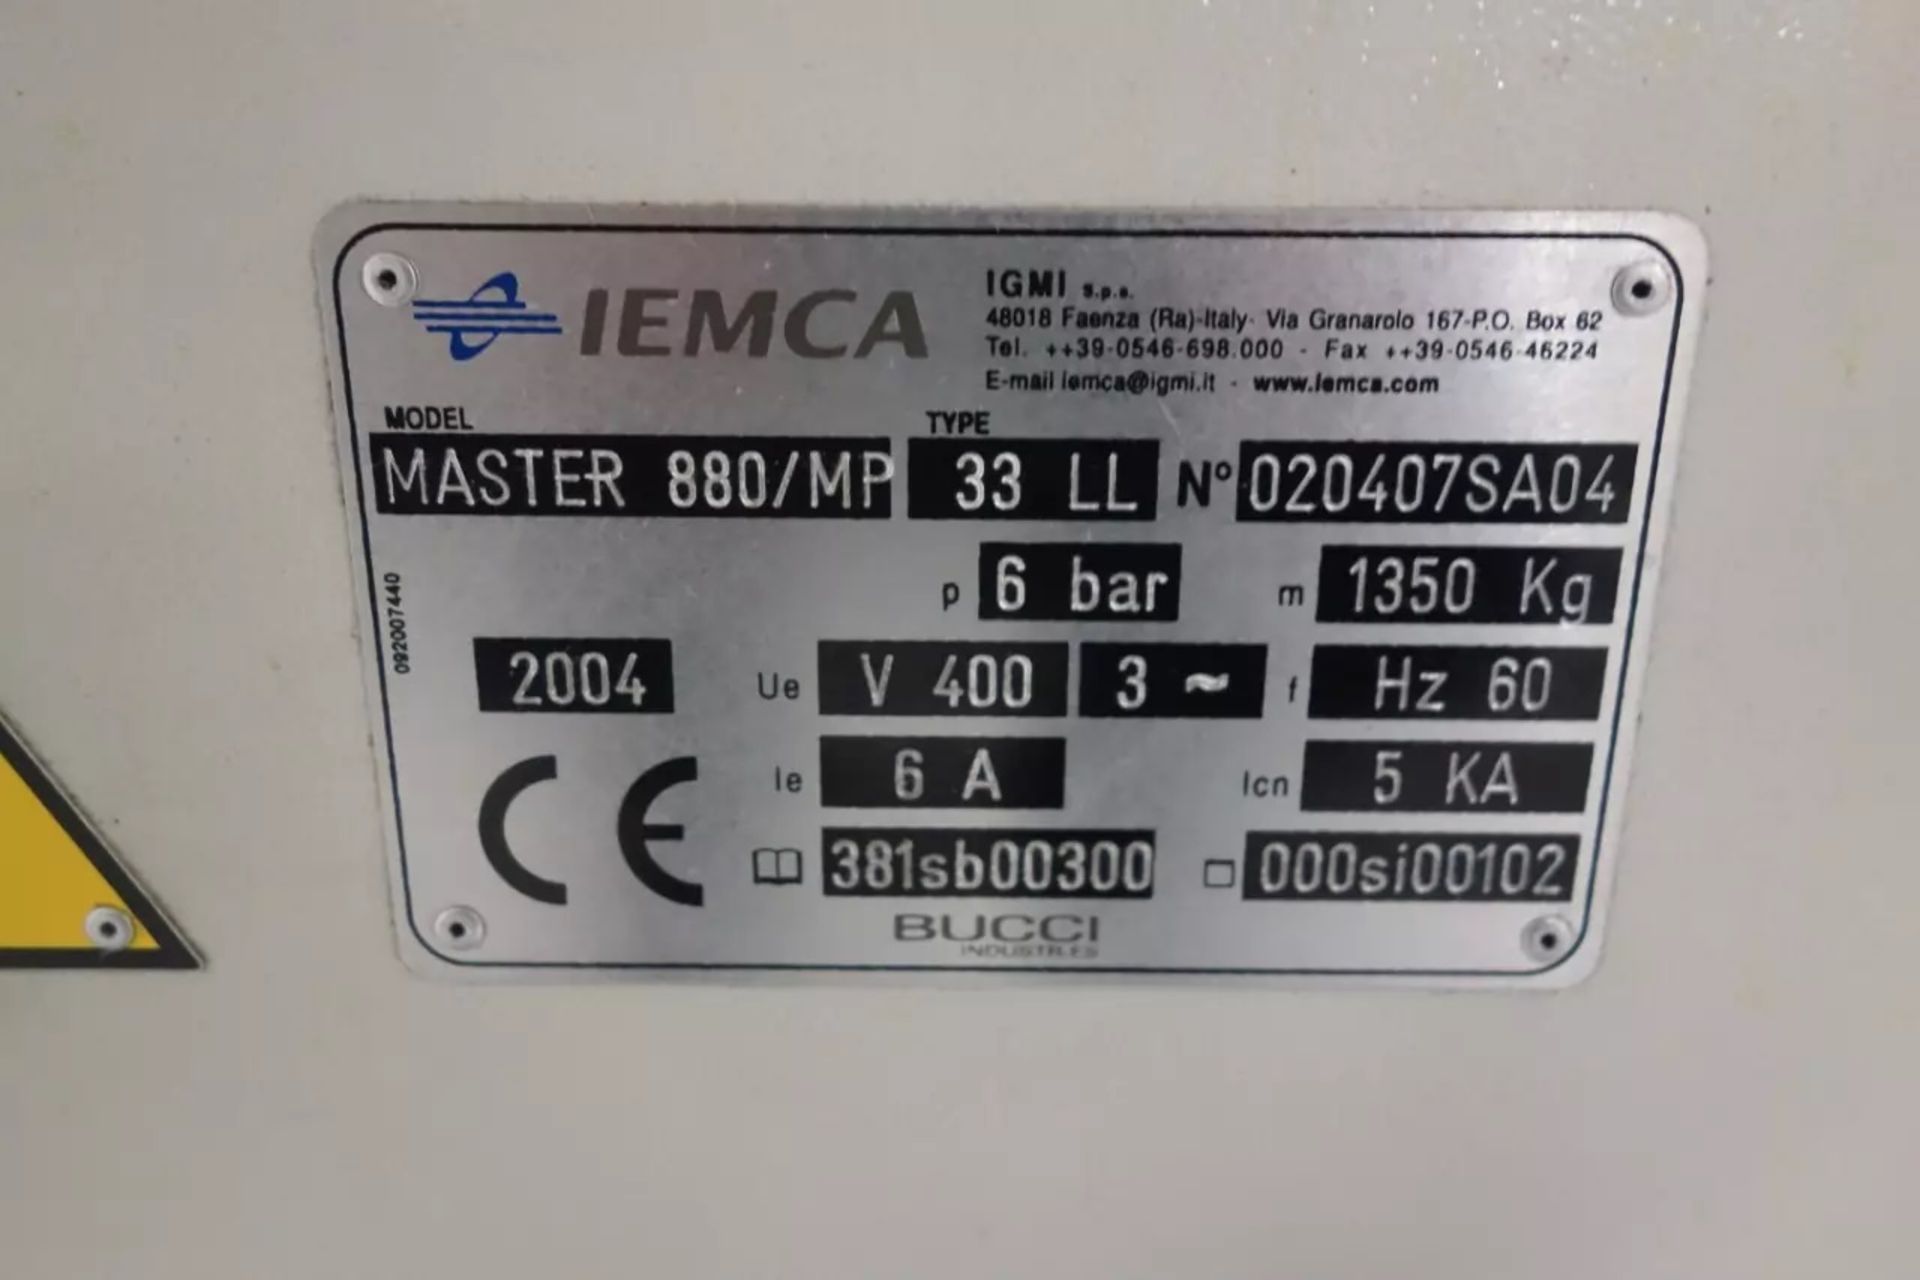 3" CAP IEMCA MASTER 880/MP-3 MAGAZINE TYPE BAR FEEDER, S/N 020407SA04, NEW 2004 - Image 6 of 6